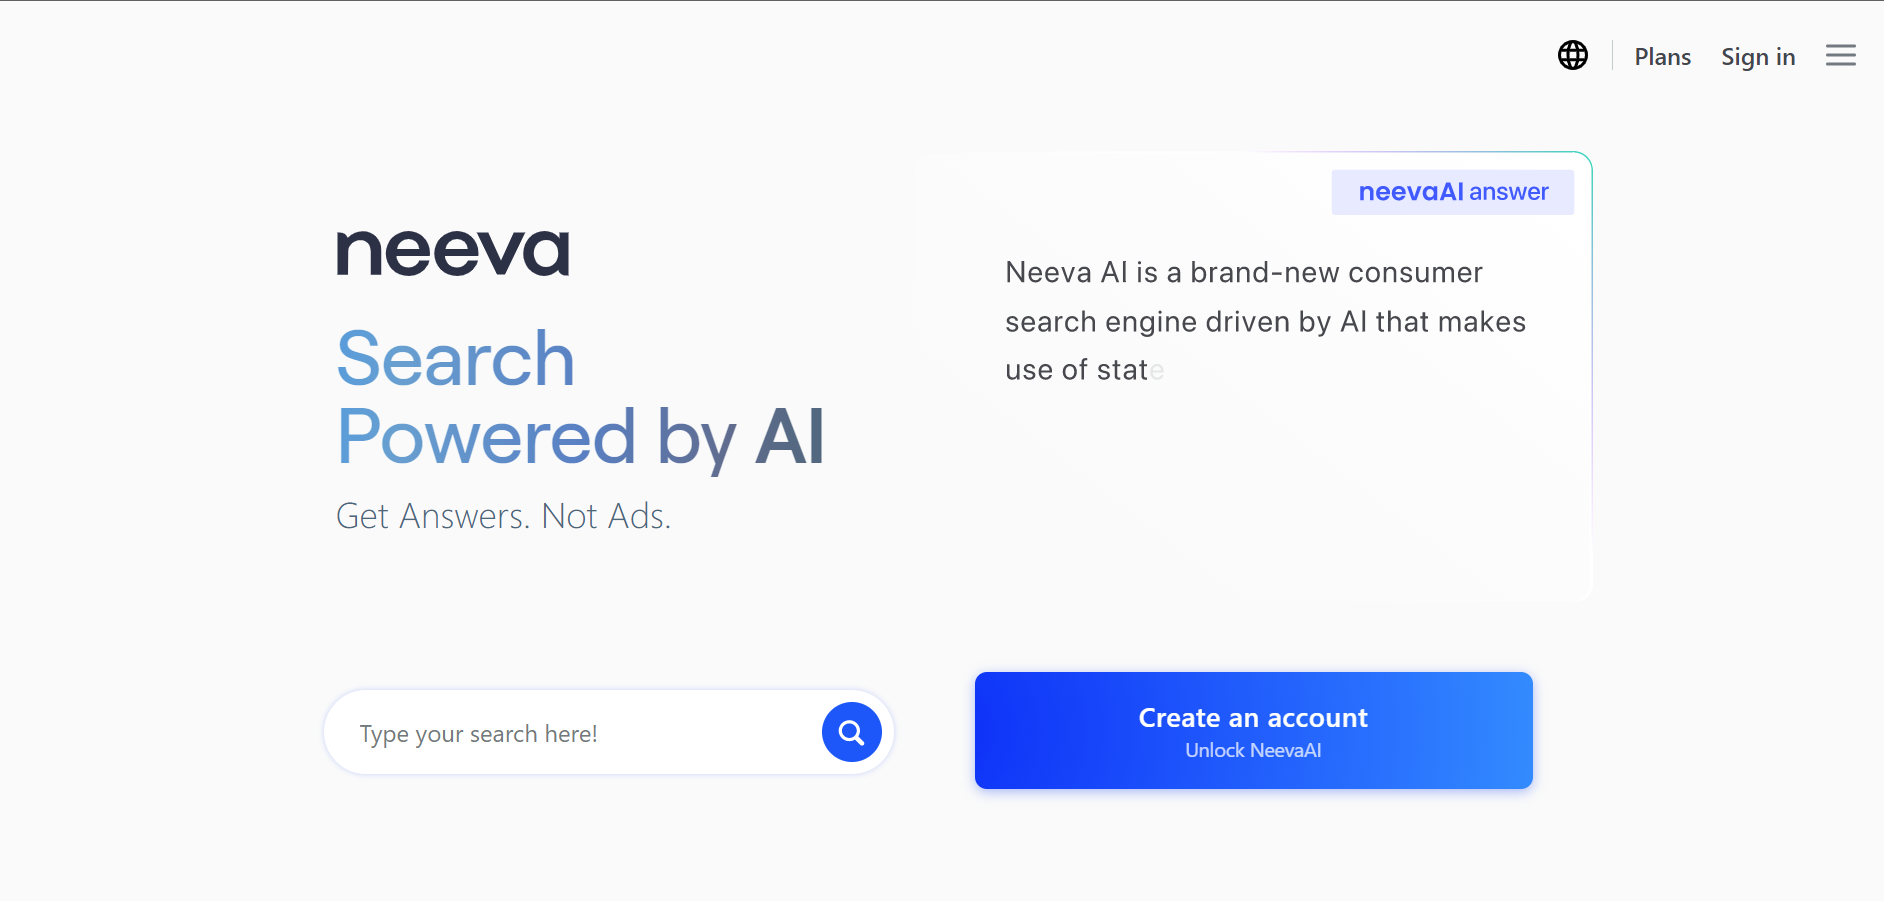 Neeva.com: The Private and Personalized Search Engine